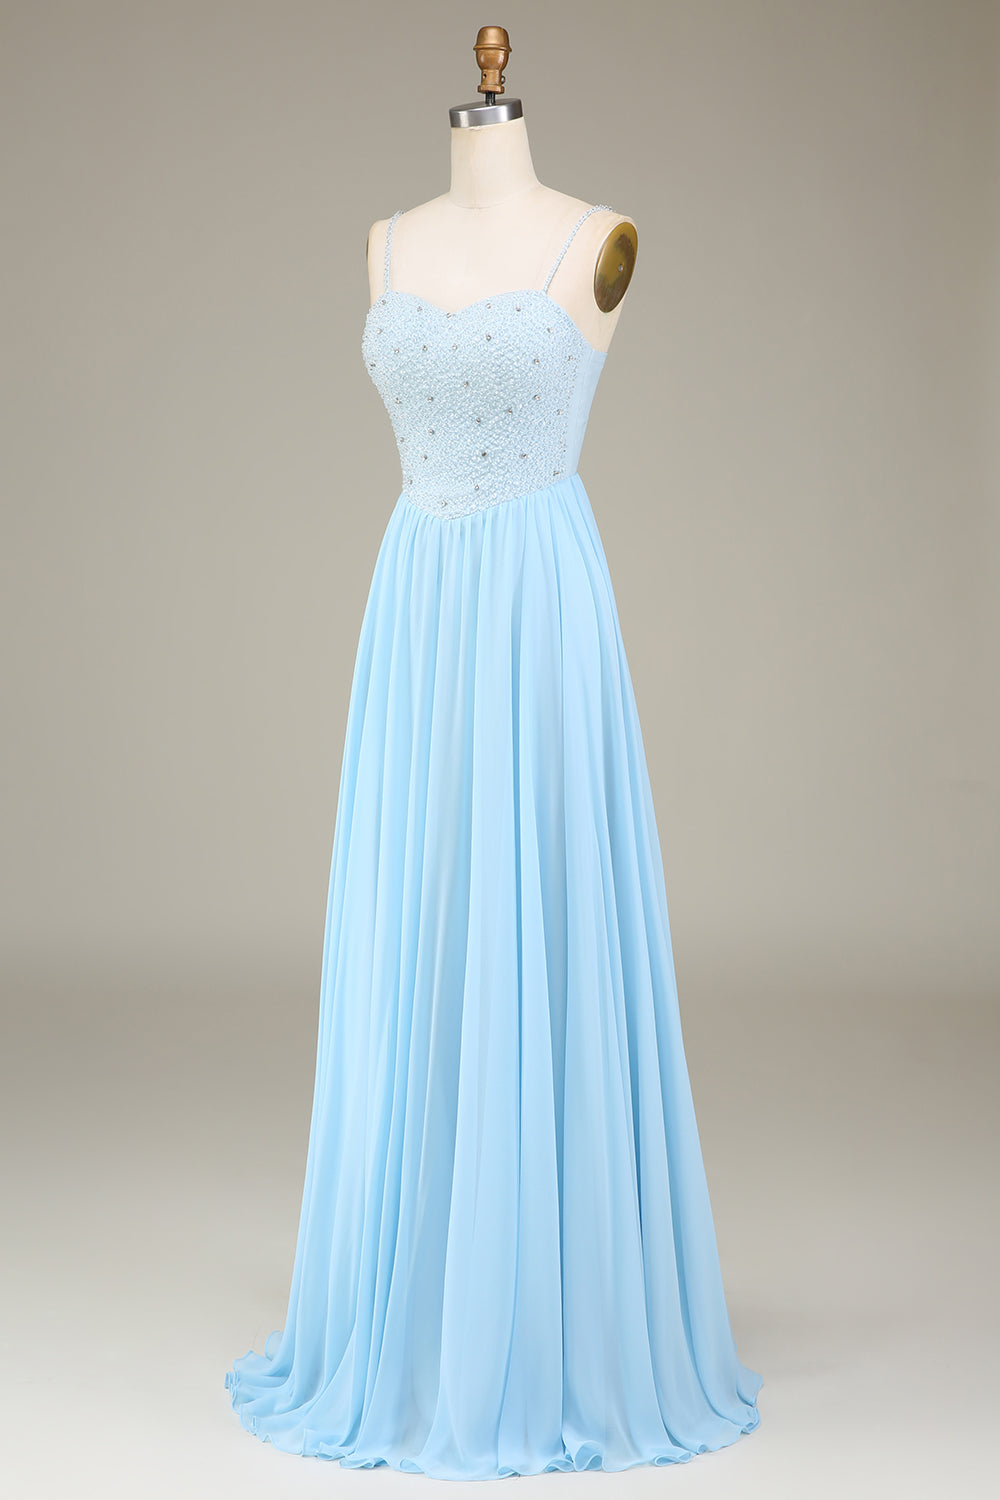 Sky Blue A-Line Chiffon Long Bridesmaid Dress With Beading